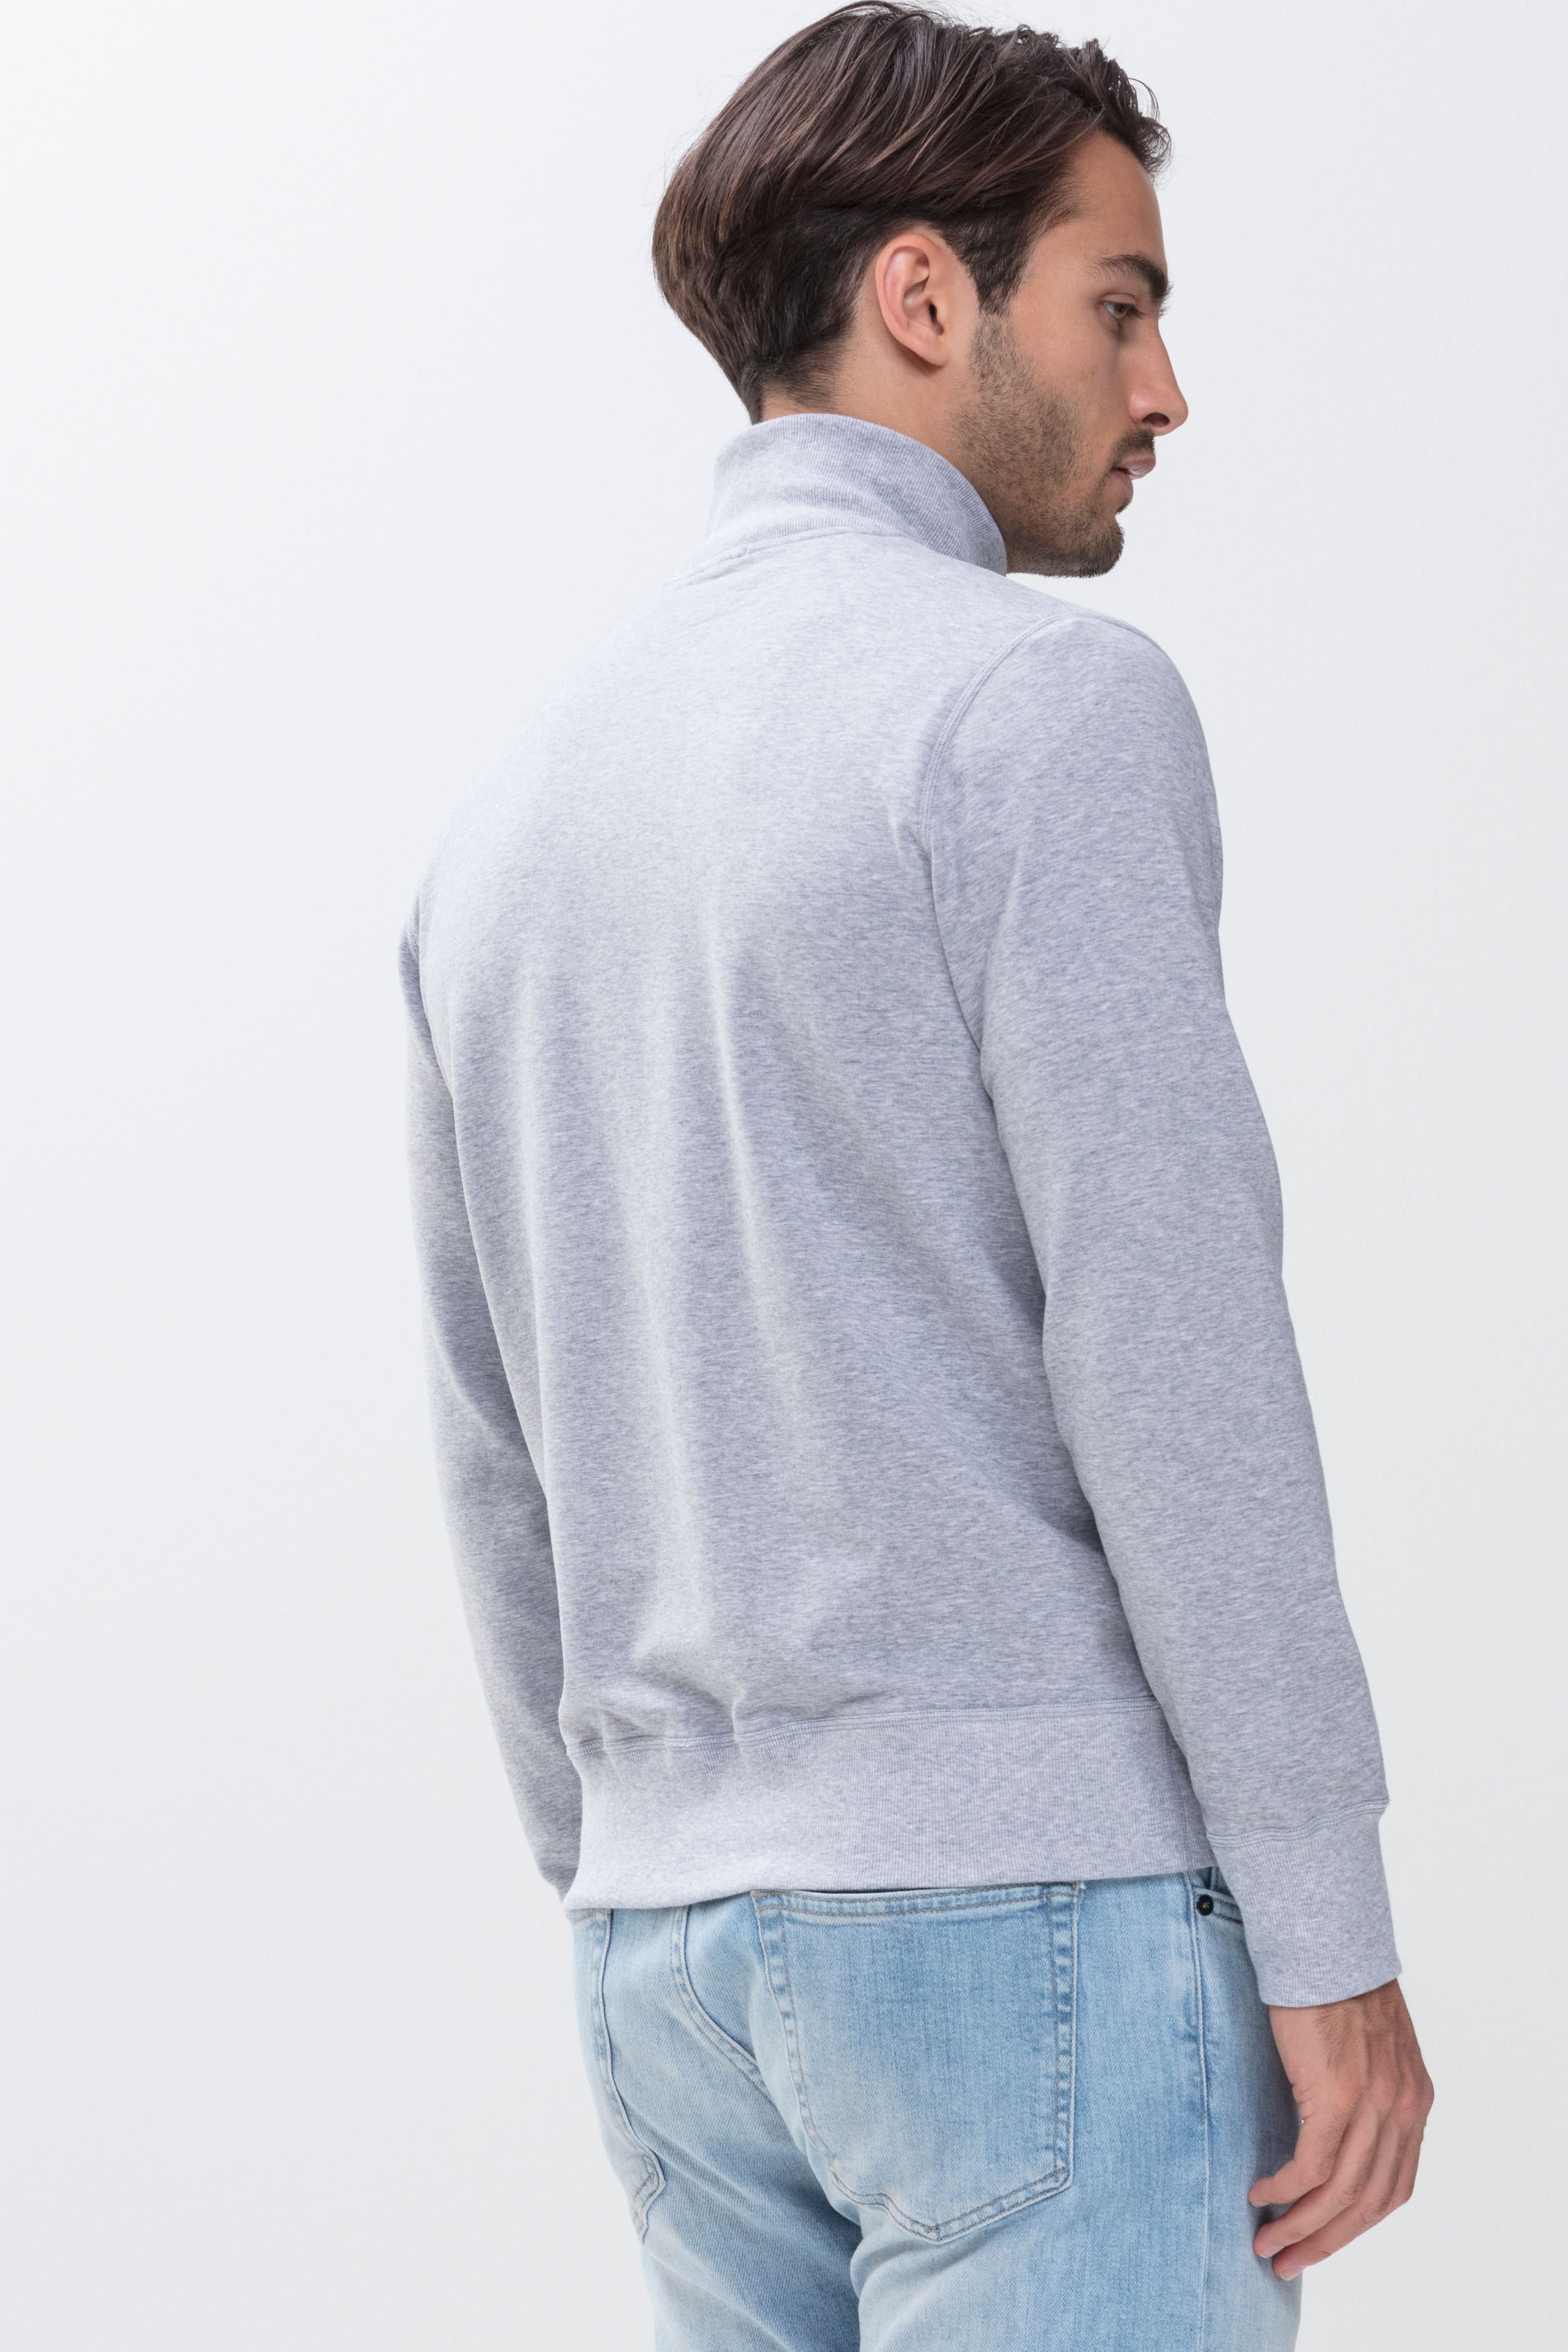 Sweat jacket with zip Light Grey Melange Serie Enjoy Rear View | mey®